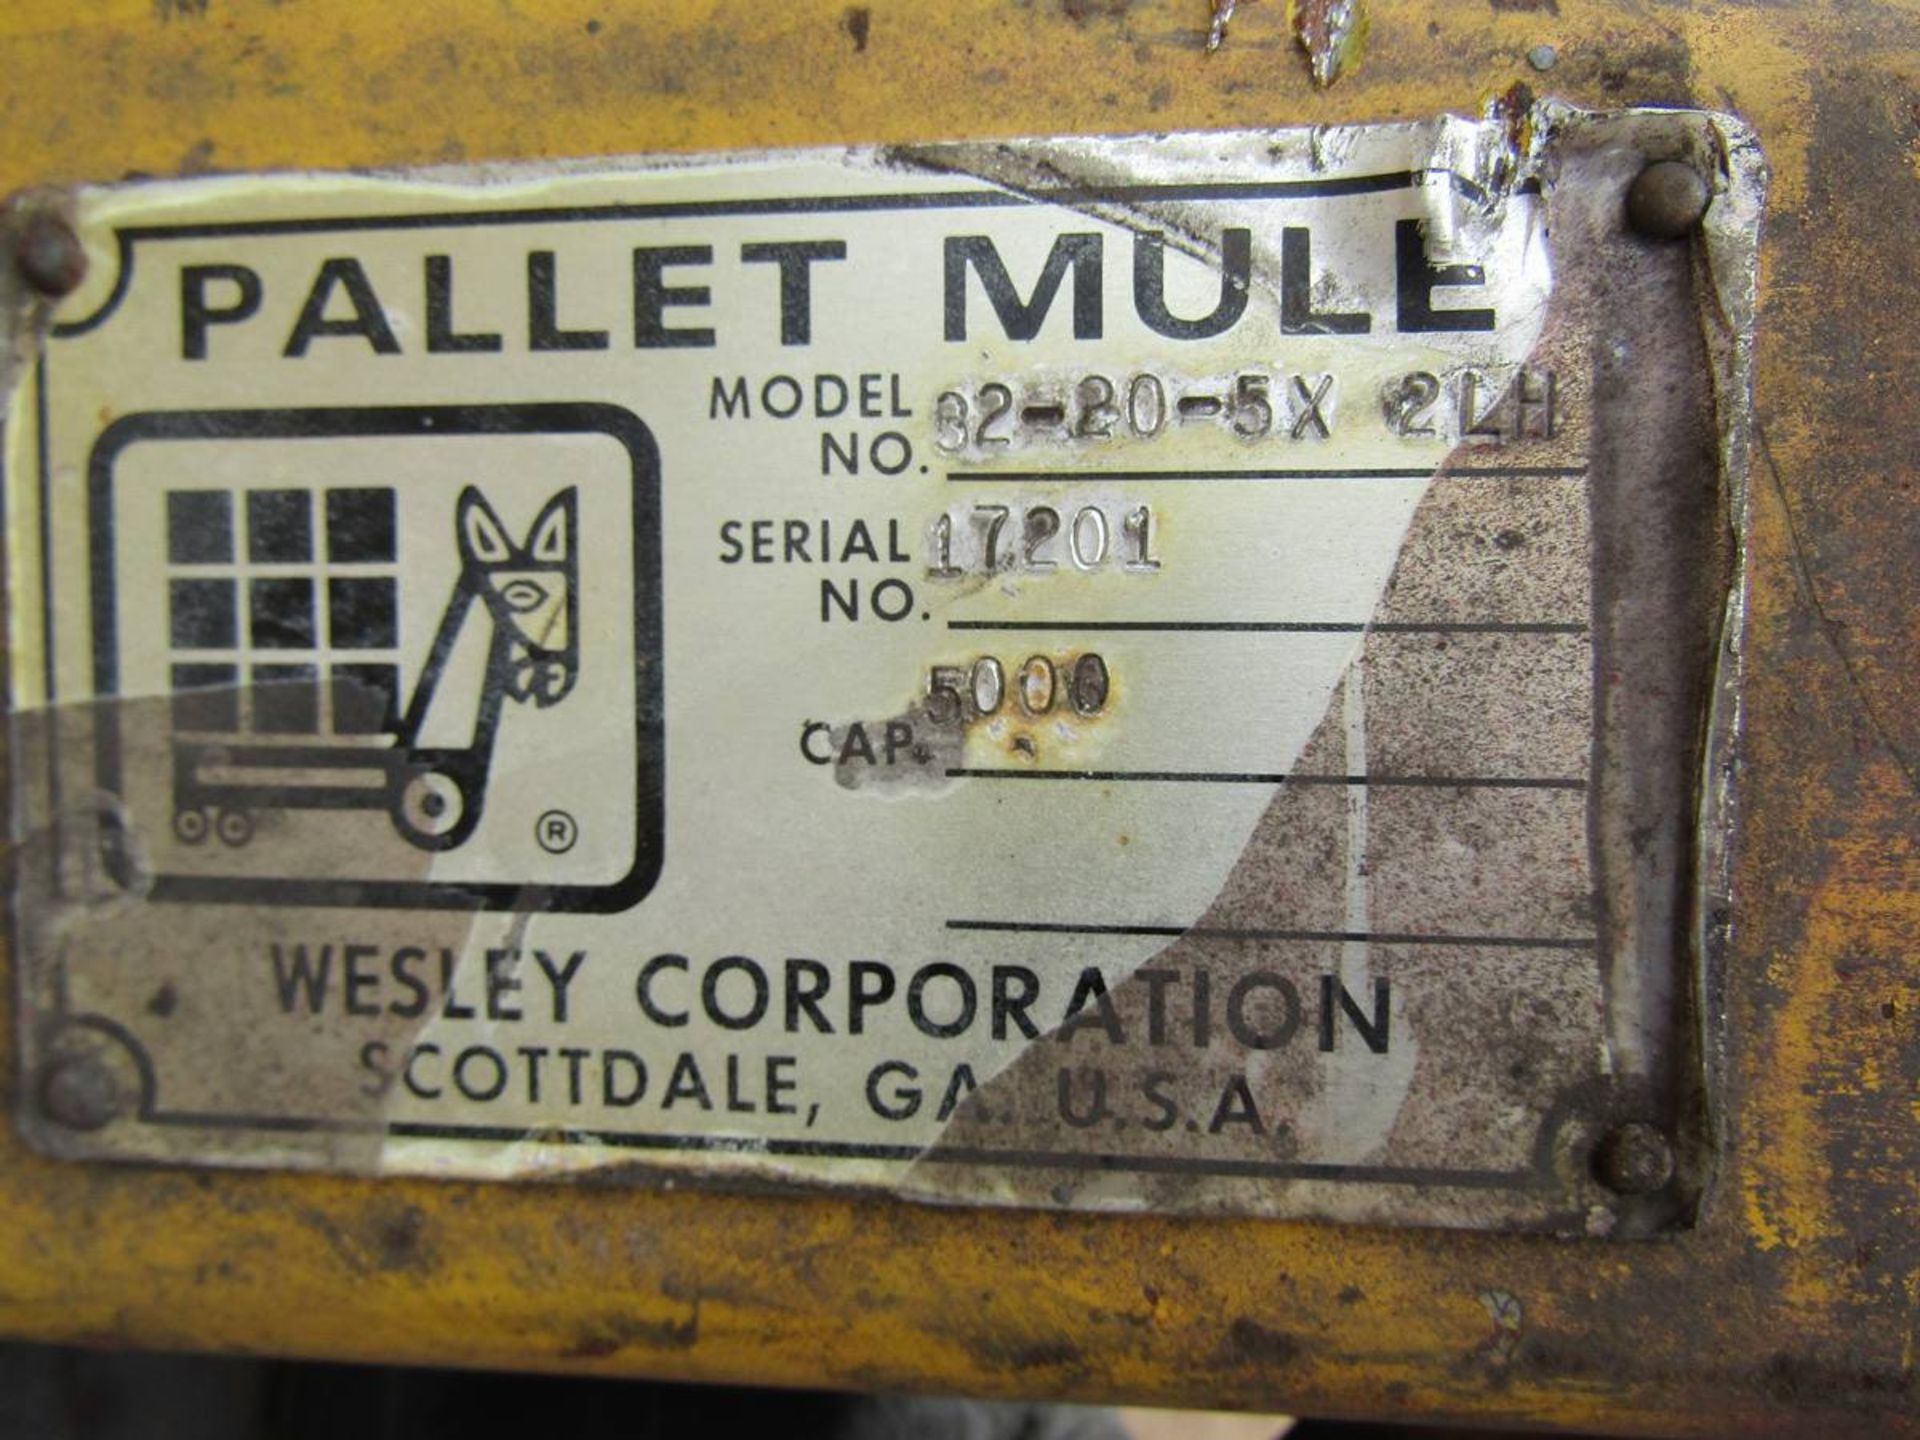 Pallet Mule 32-20-5X-2LH Pallet Jack - Image 2 of 2